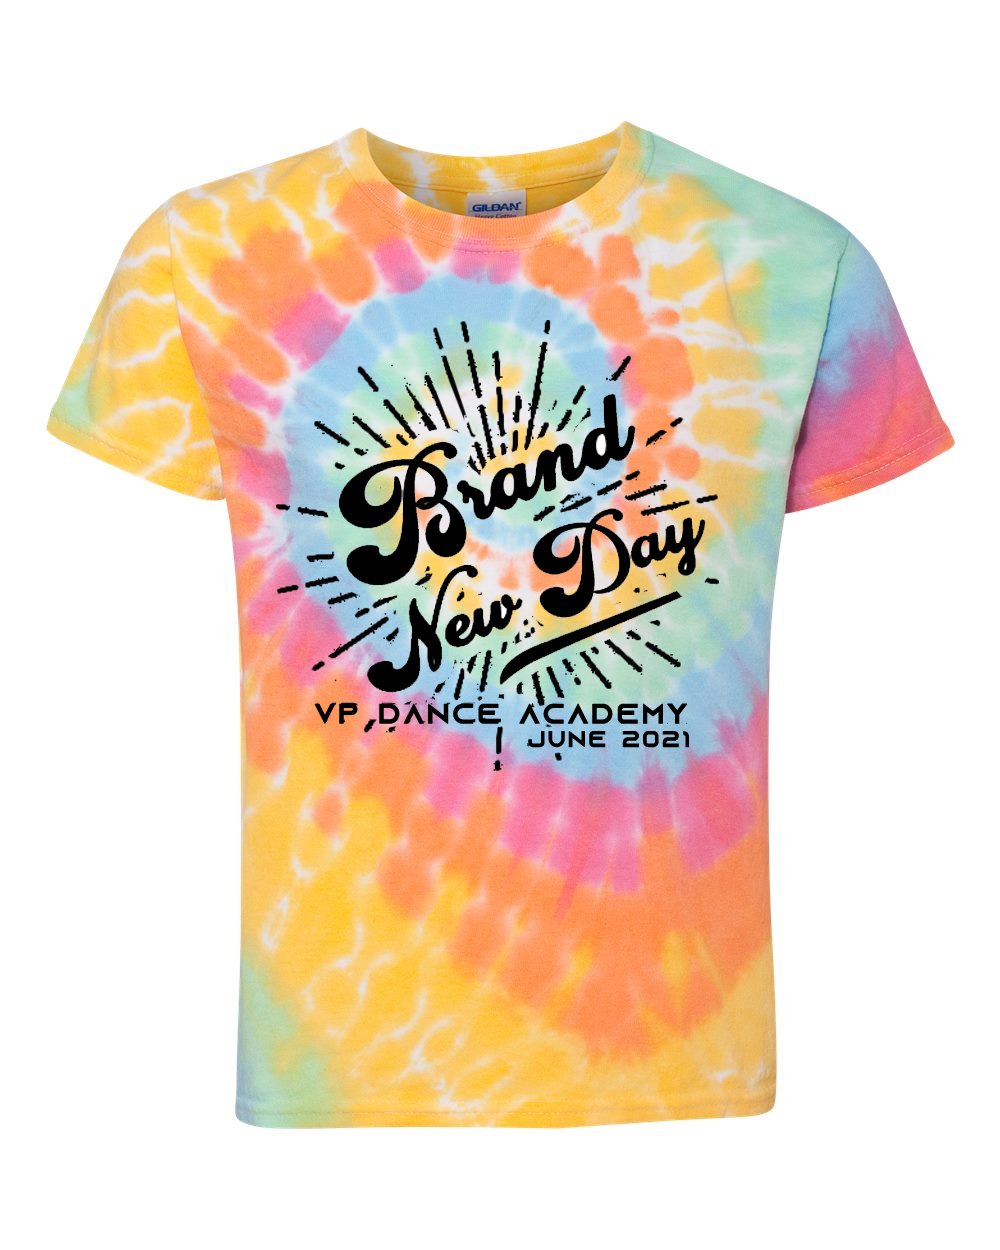 VP Dance Academy Tie-Dye T-Shirt - Brand New Day June 2021 - YOUTH